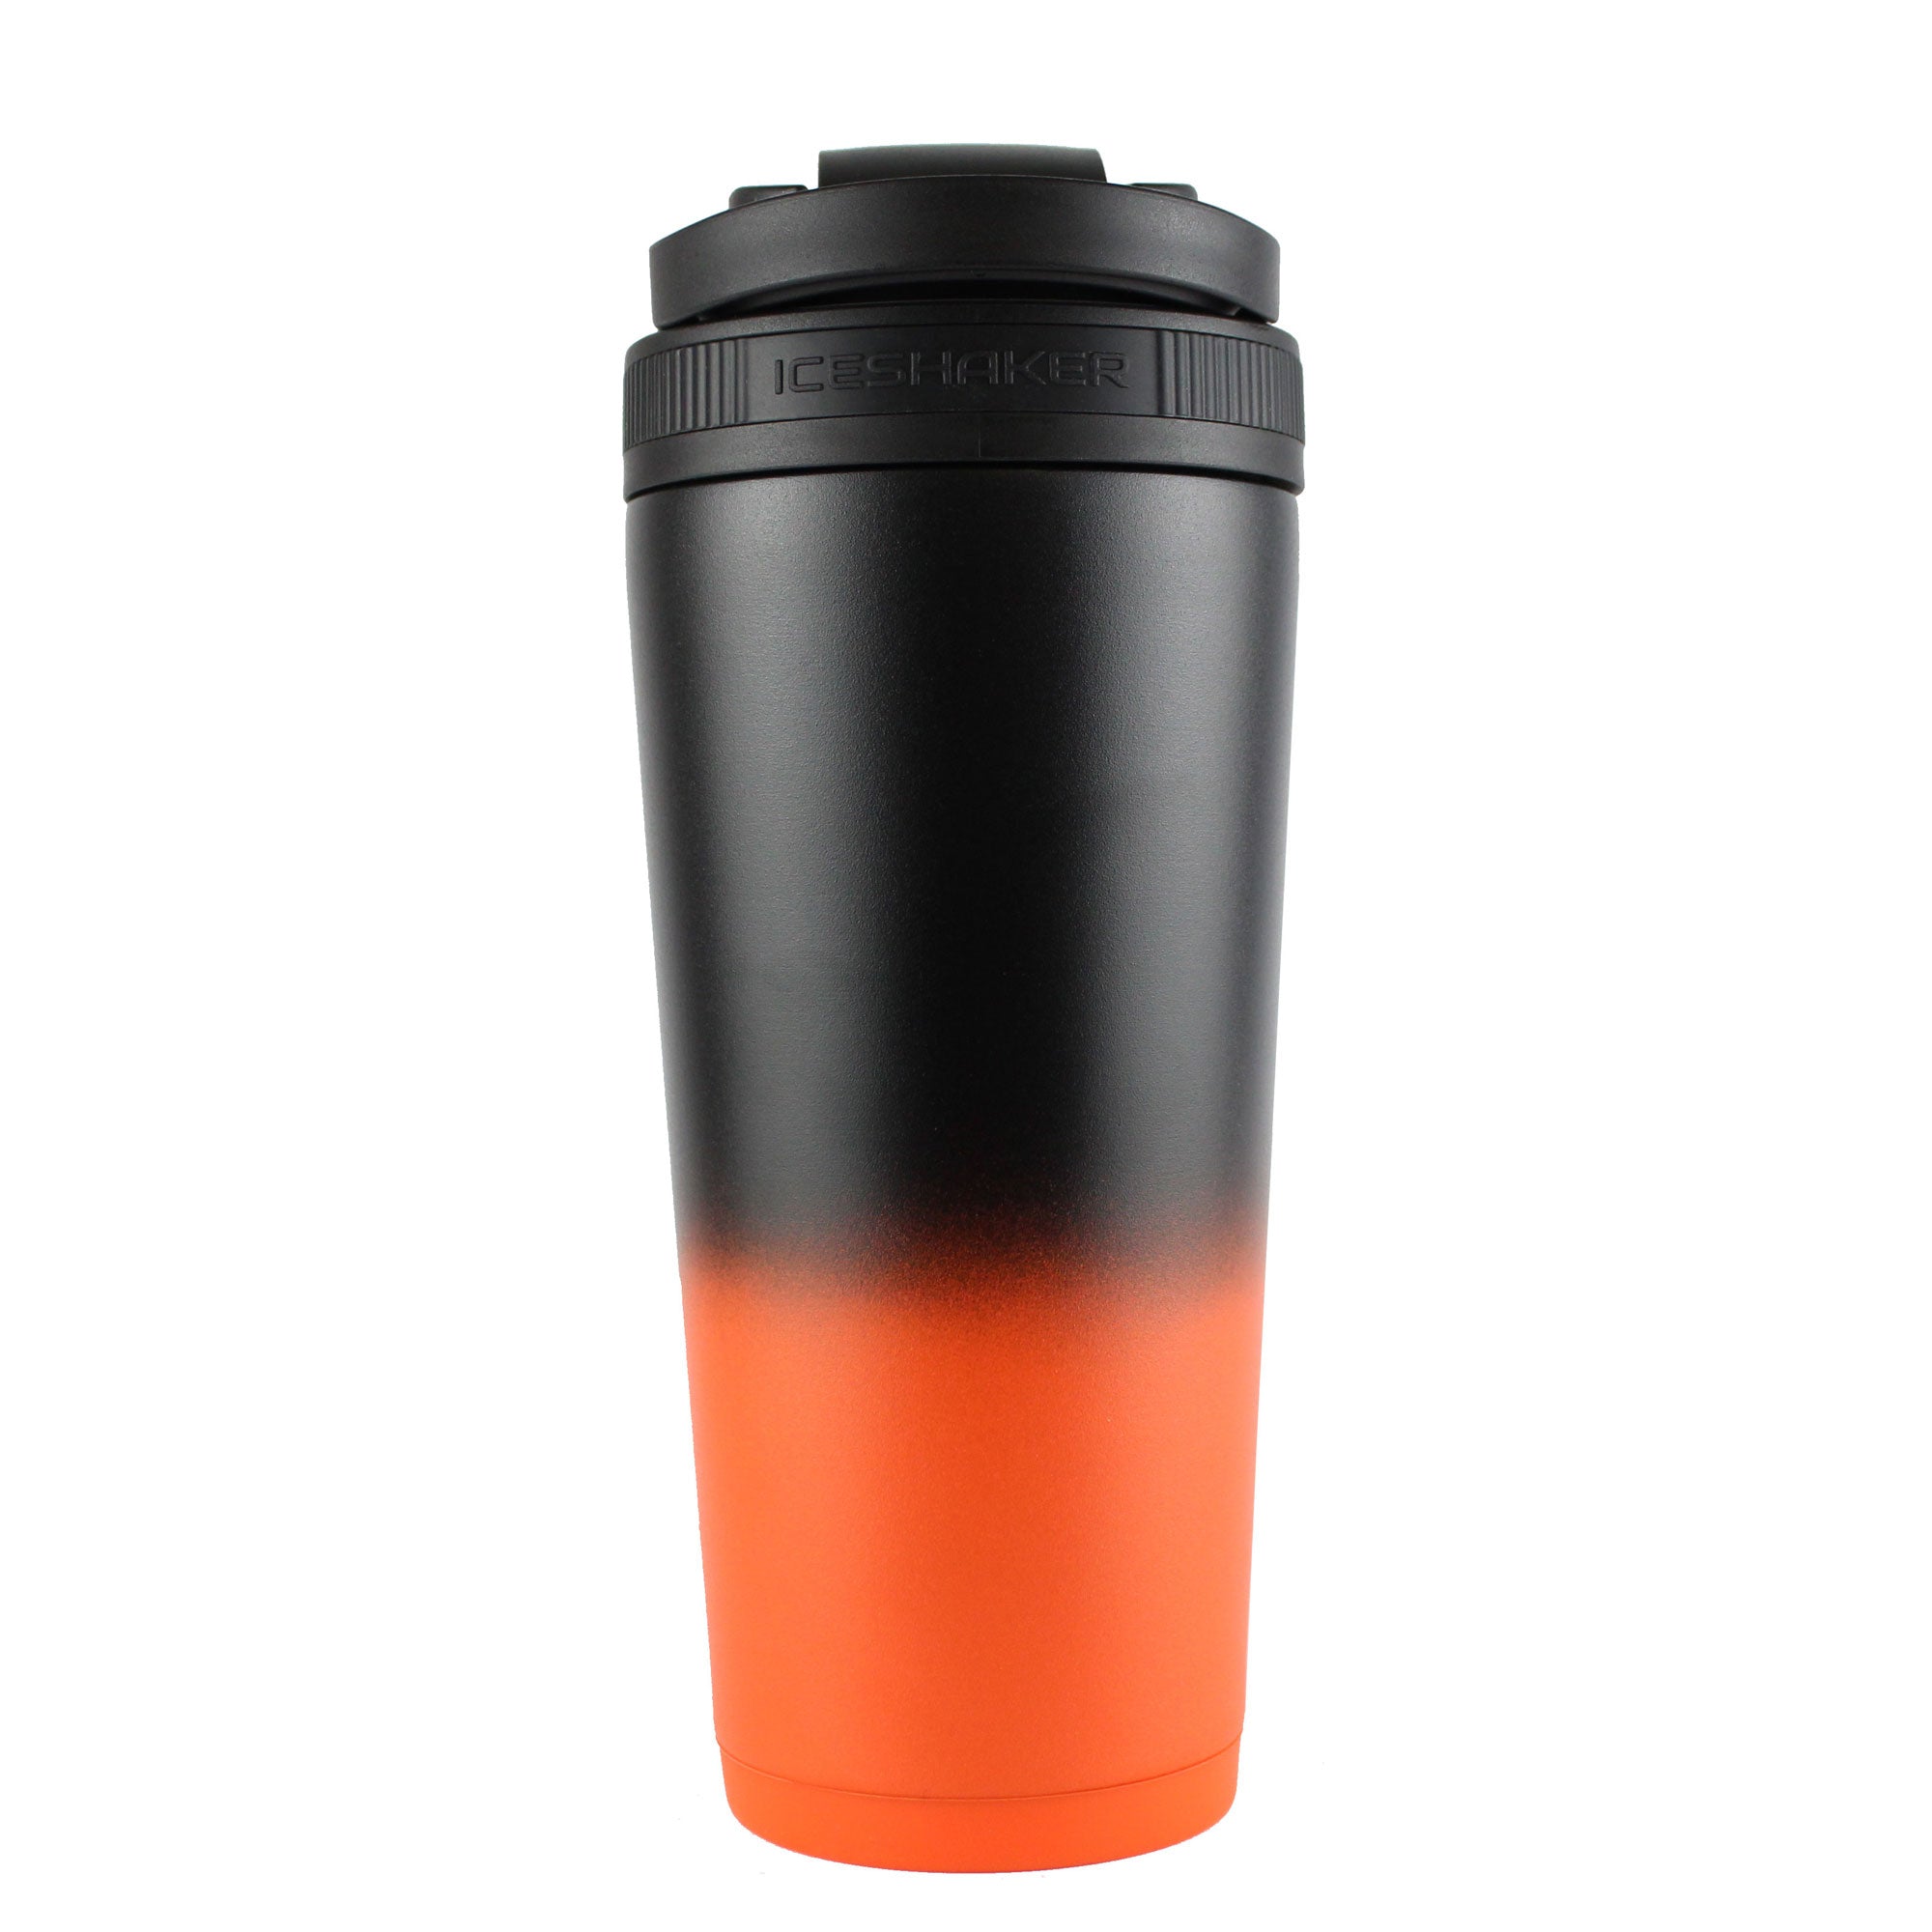 26oz Ice Shaker - Orange Black Ombre